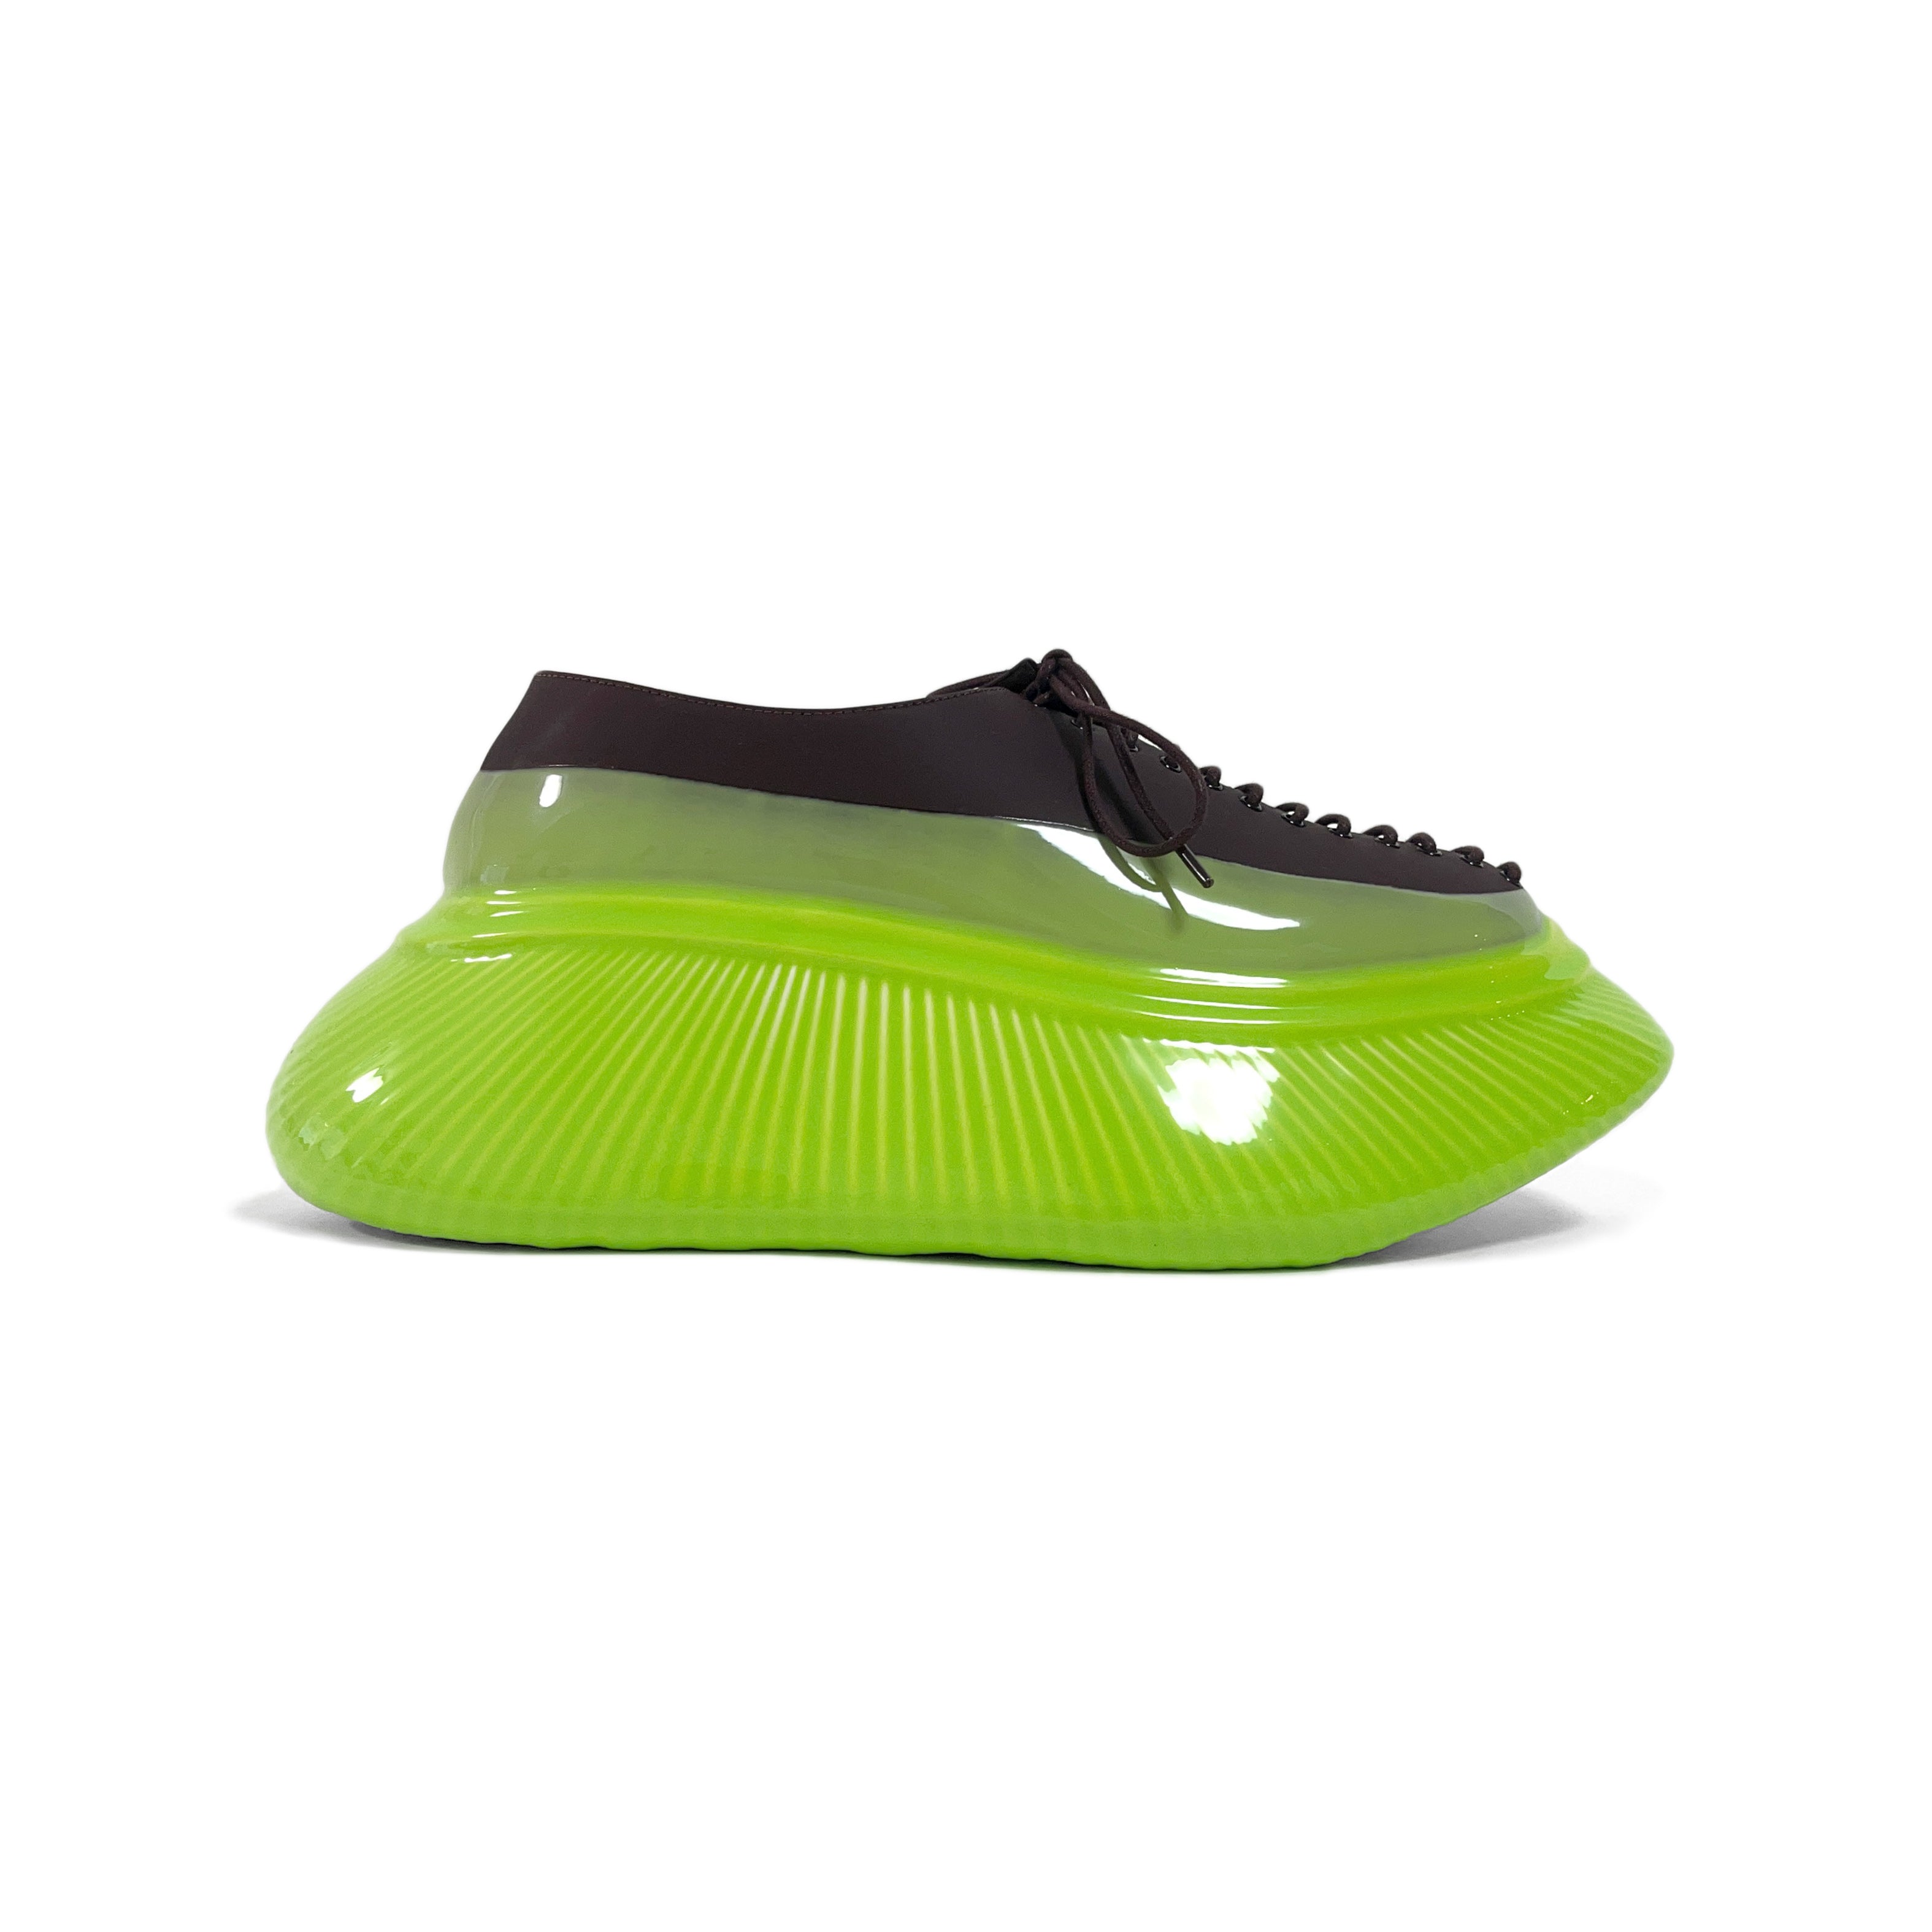 Liver shoes Matt Brown × Lime DIP | THREE TREASURES 公式ストア